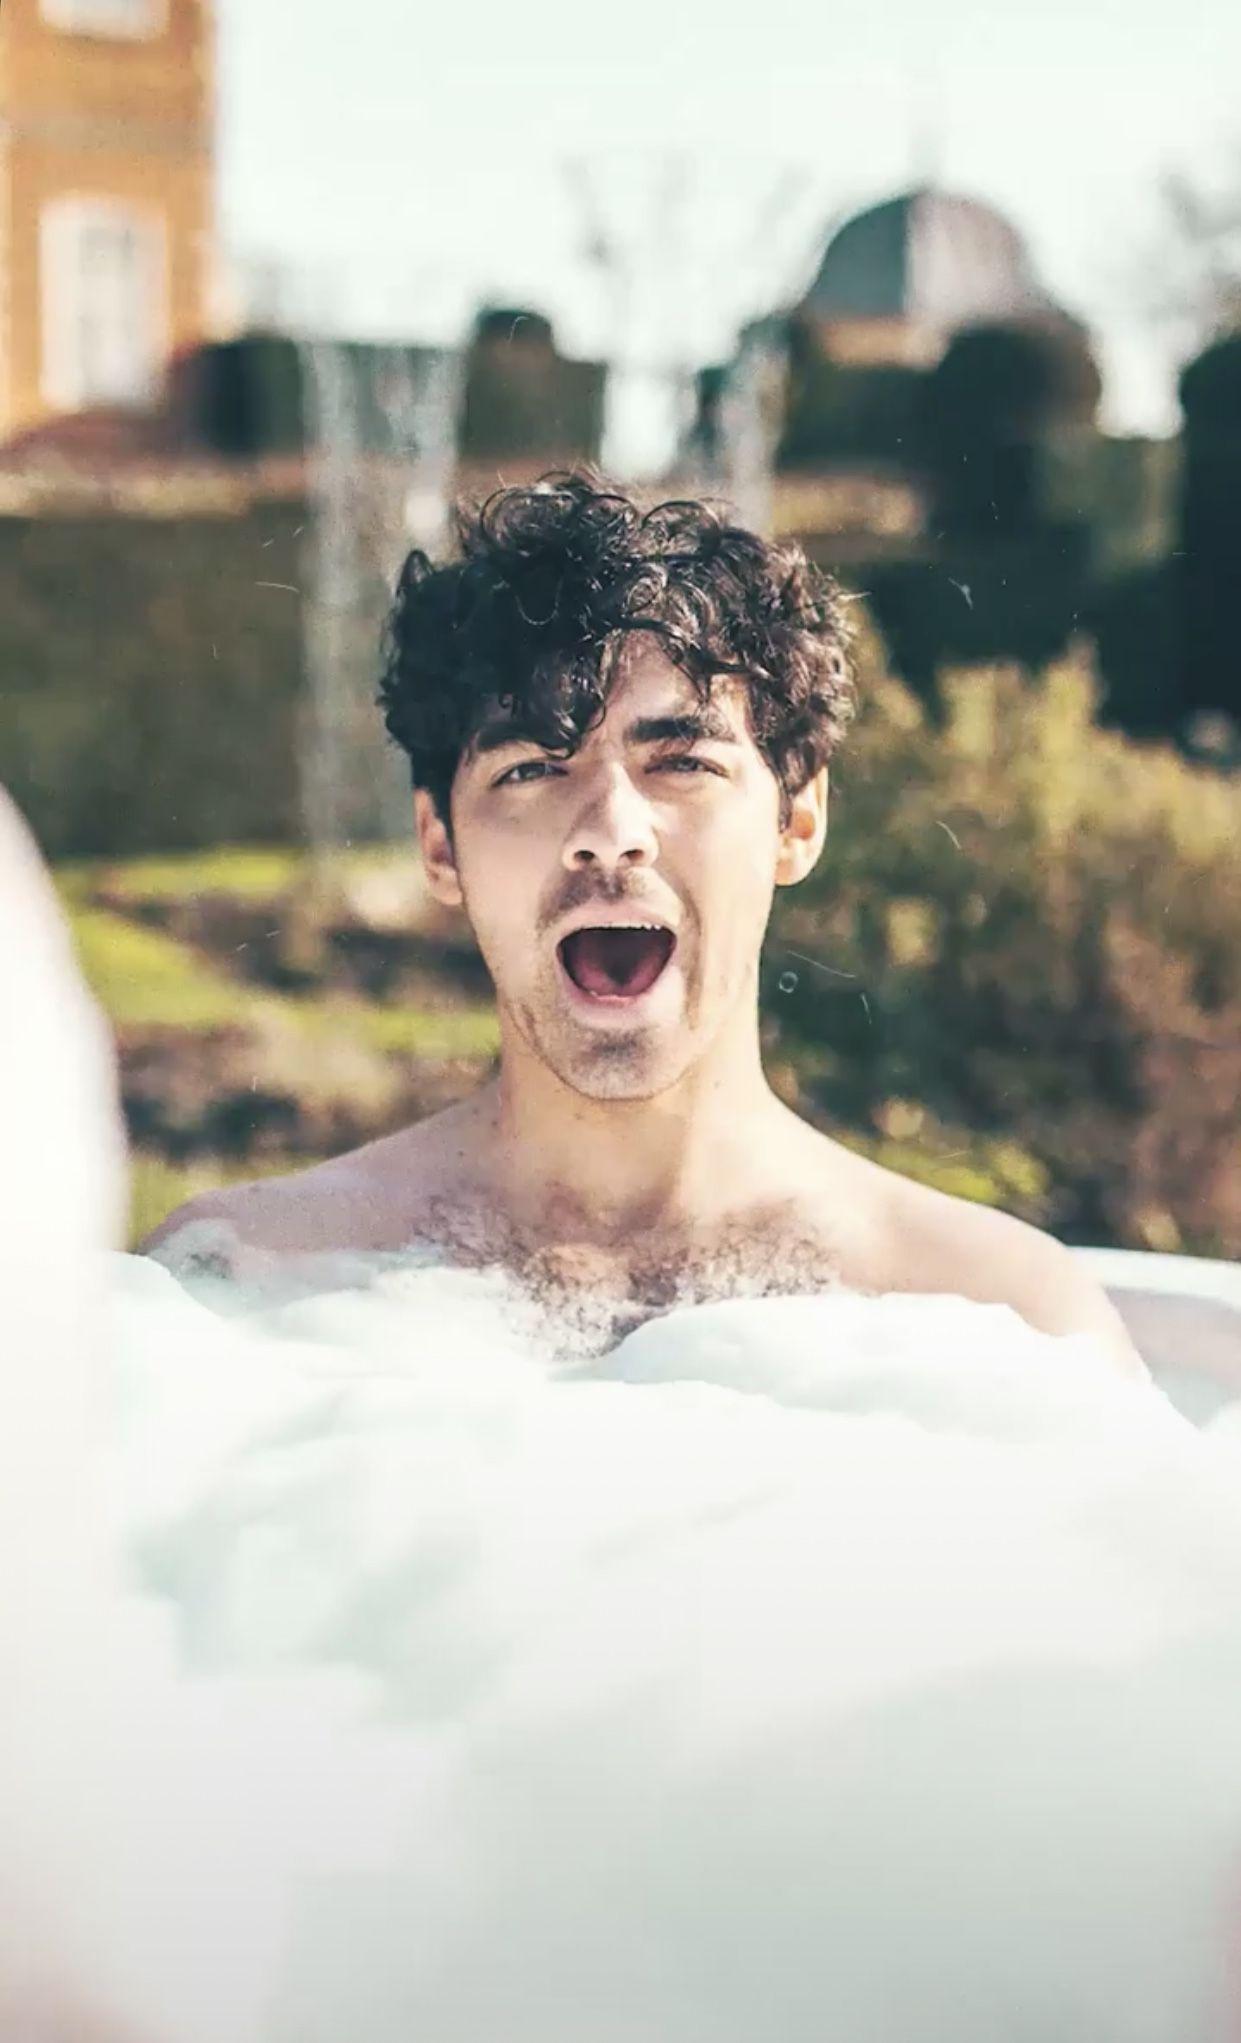 Joe Jonas on their new comeback “Sucker” MV #JonasBrothers